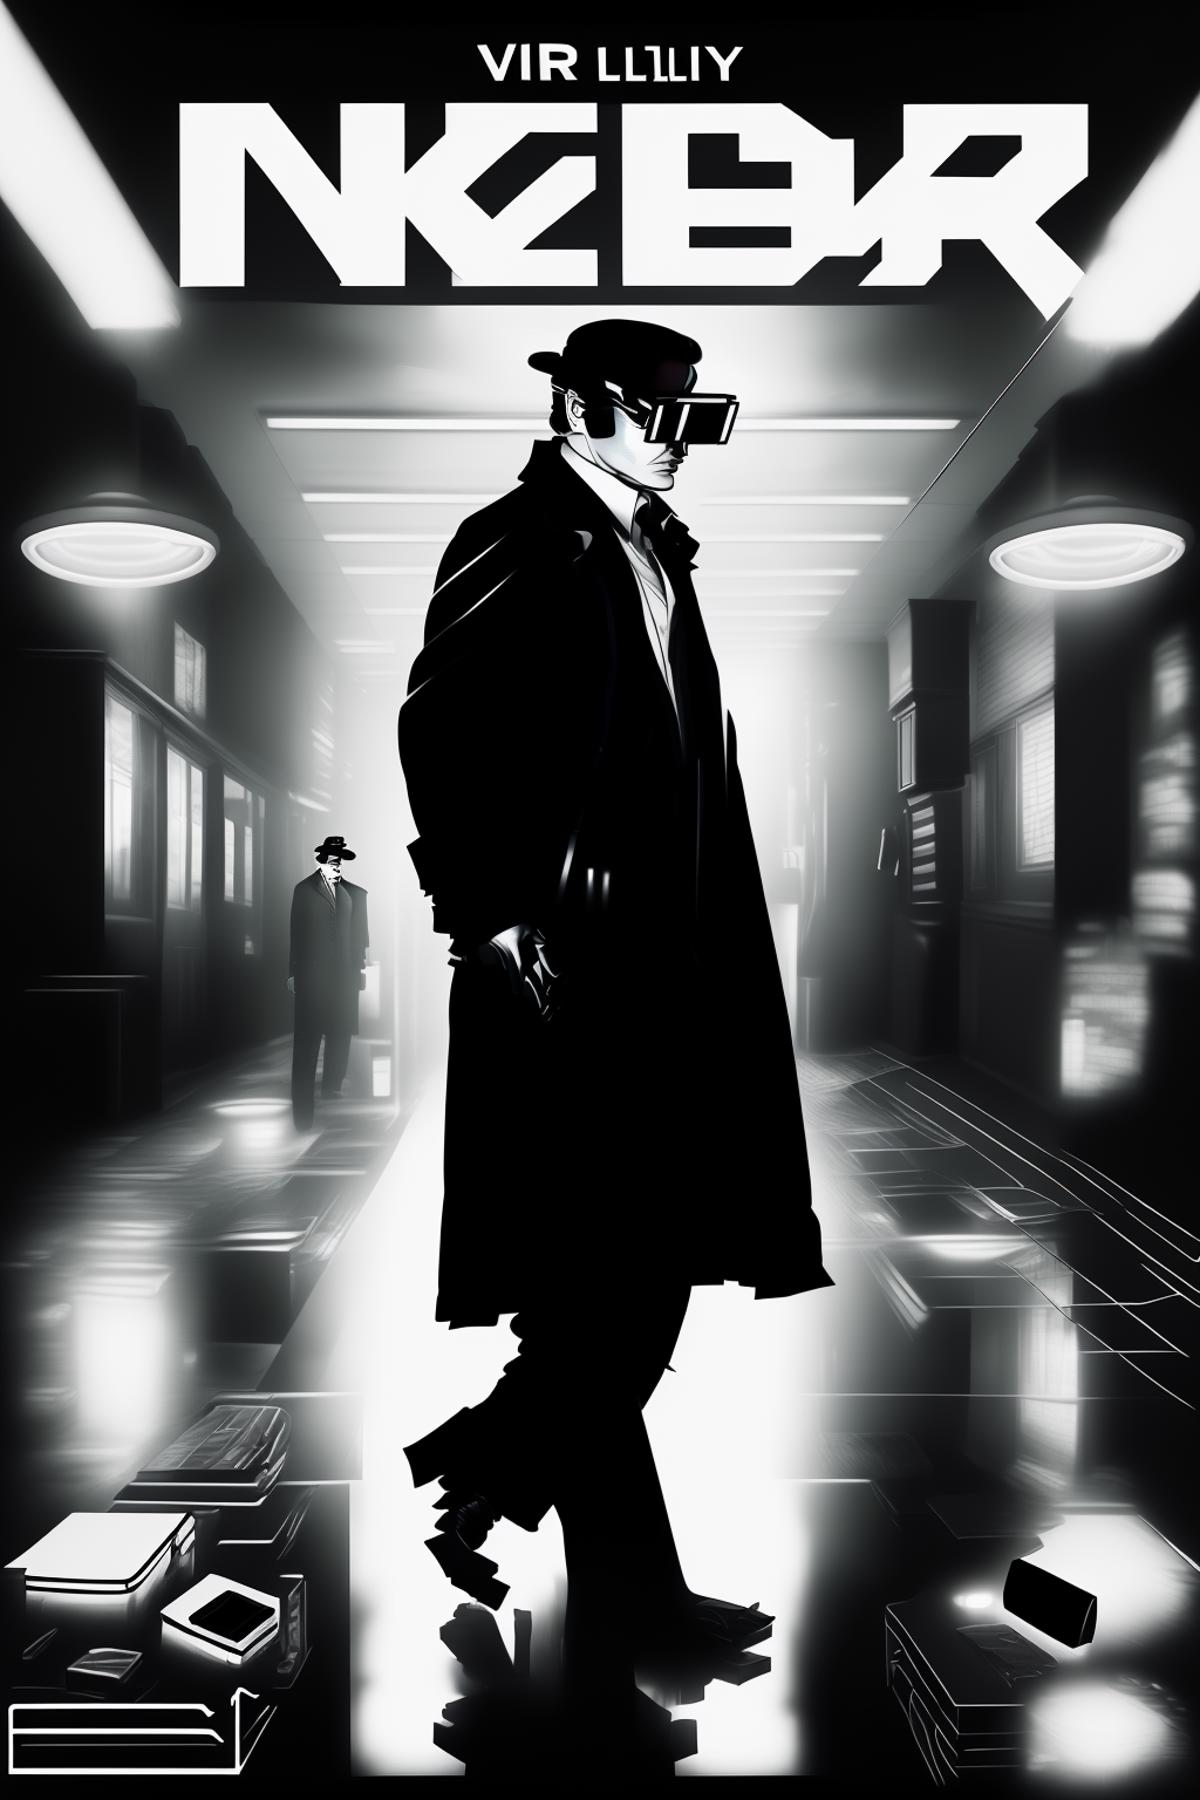 Virtual Reality Noir image by Ciro_Negrogni